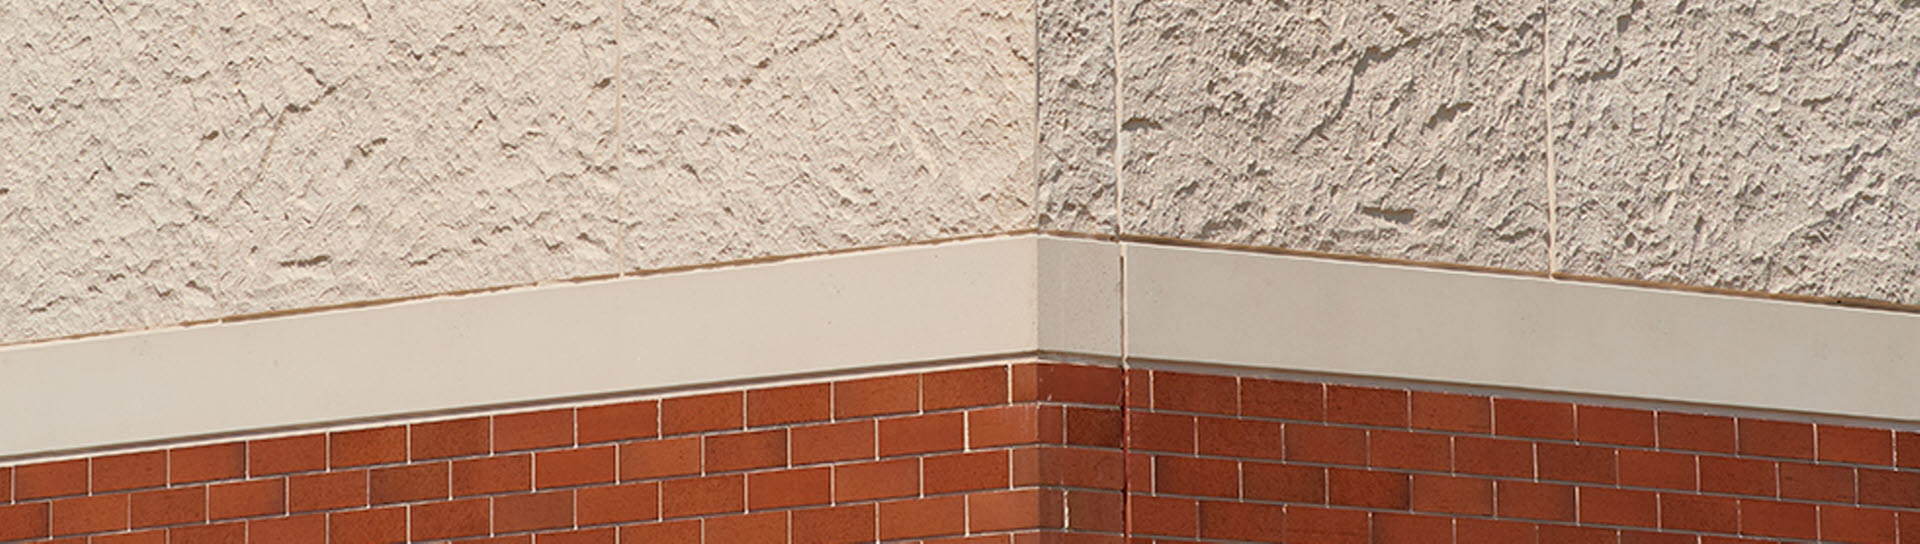 Insulated wall panel edge